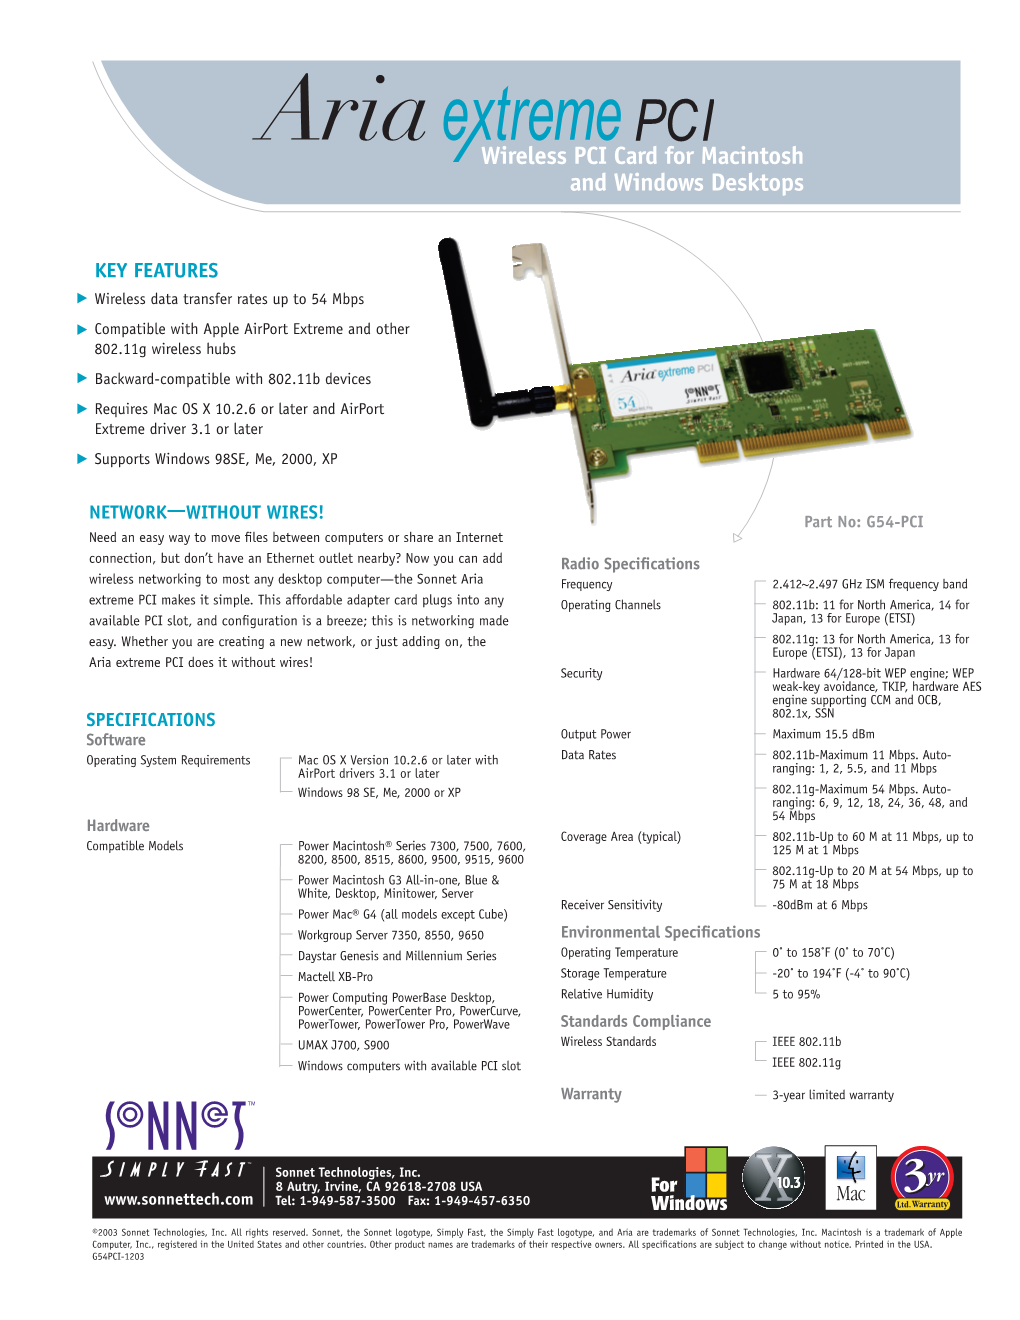 Wireless PCI Card for Macintosh and Windows Desktops